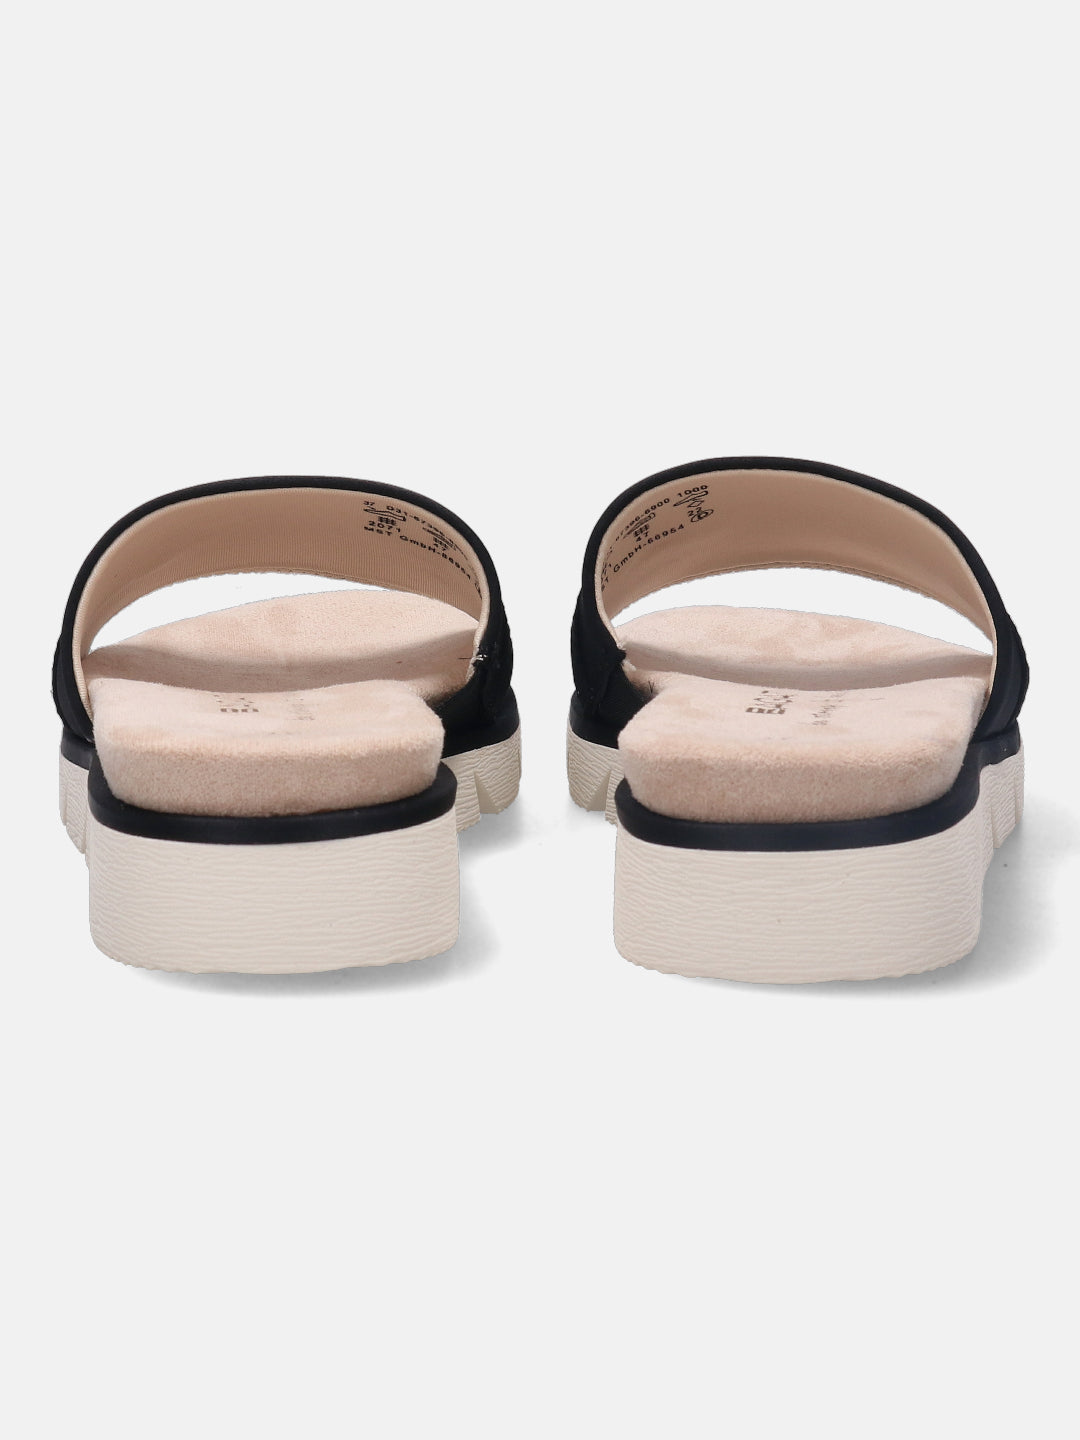 Kiko Black Flatform Sandals - BAGATT